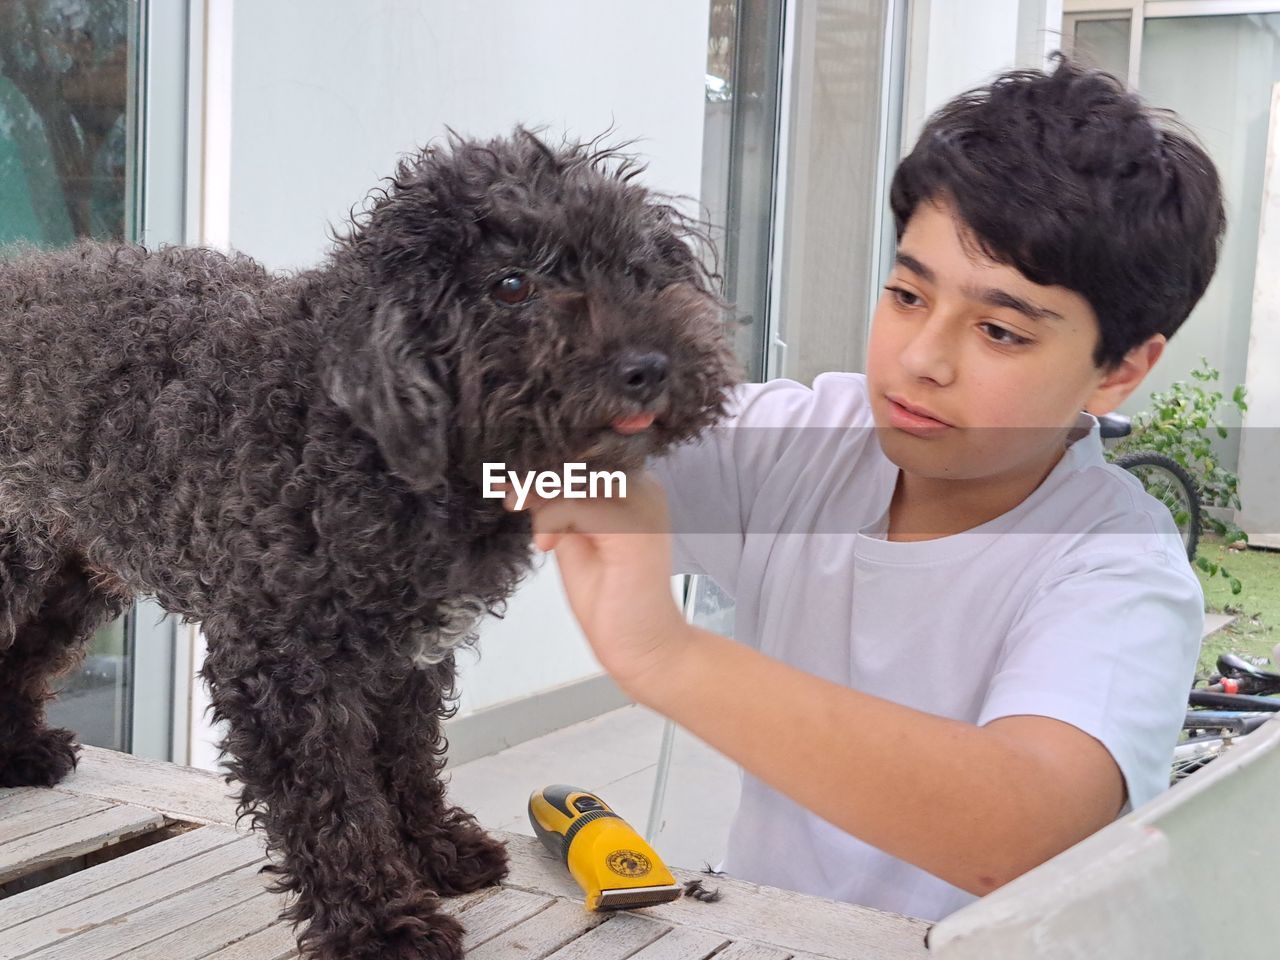 Portrait of a boy with dog